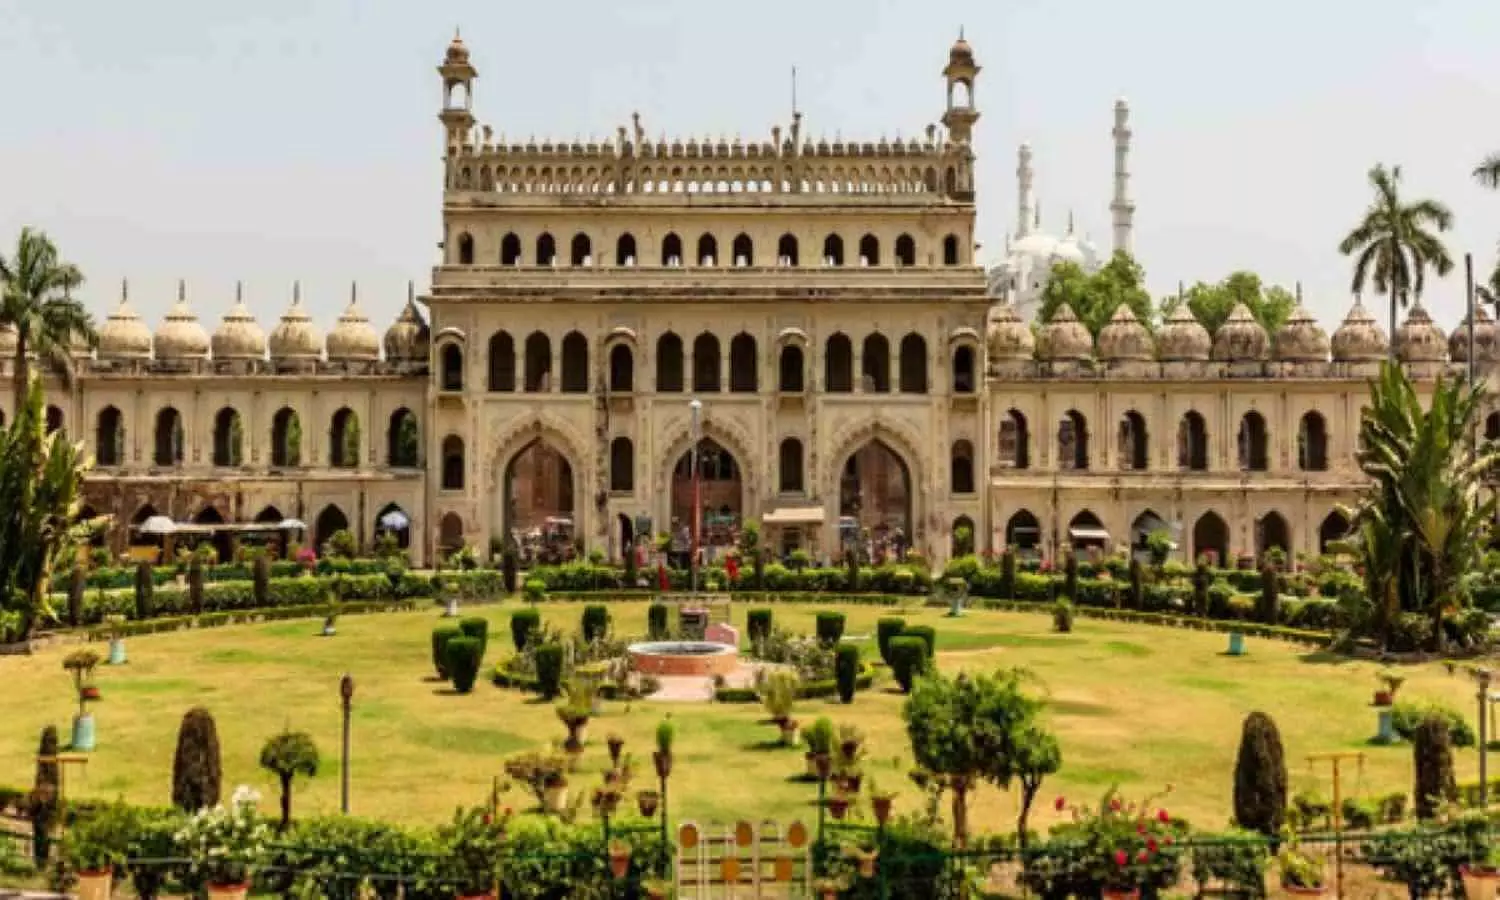 Lucknow Bada Imambara